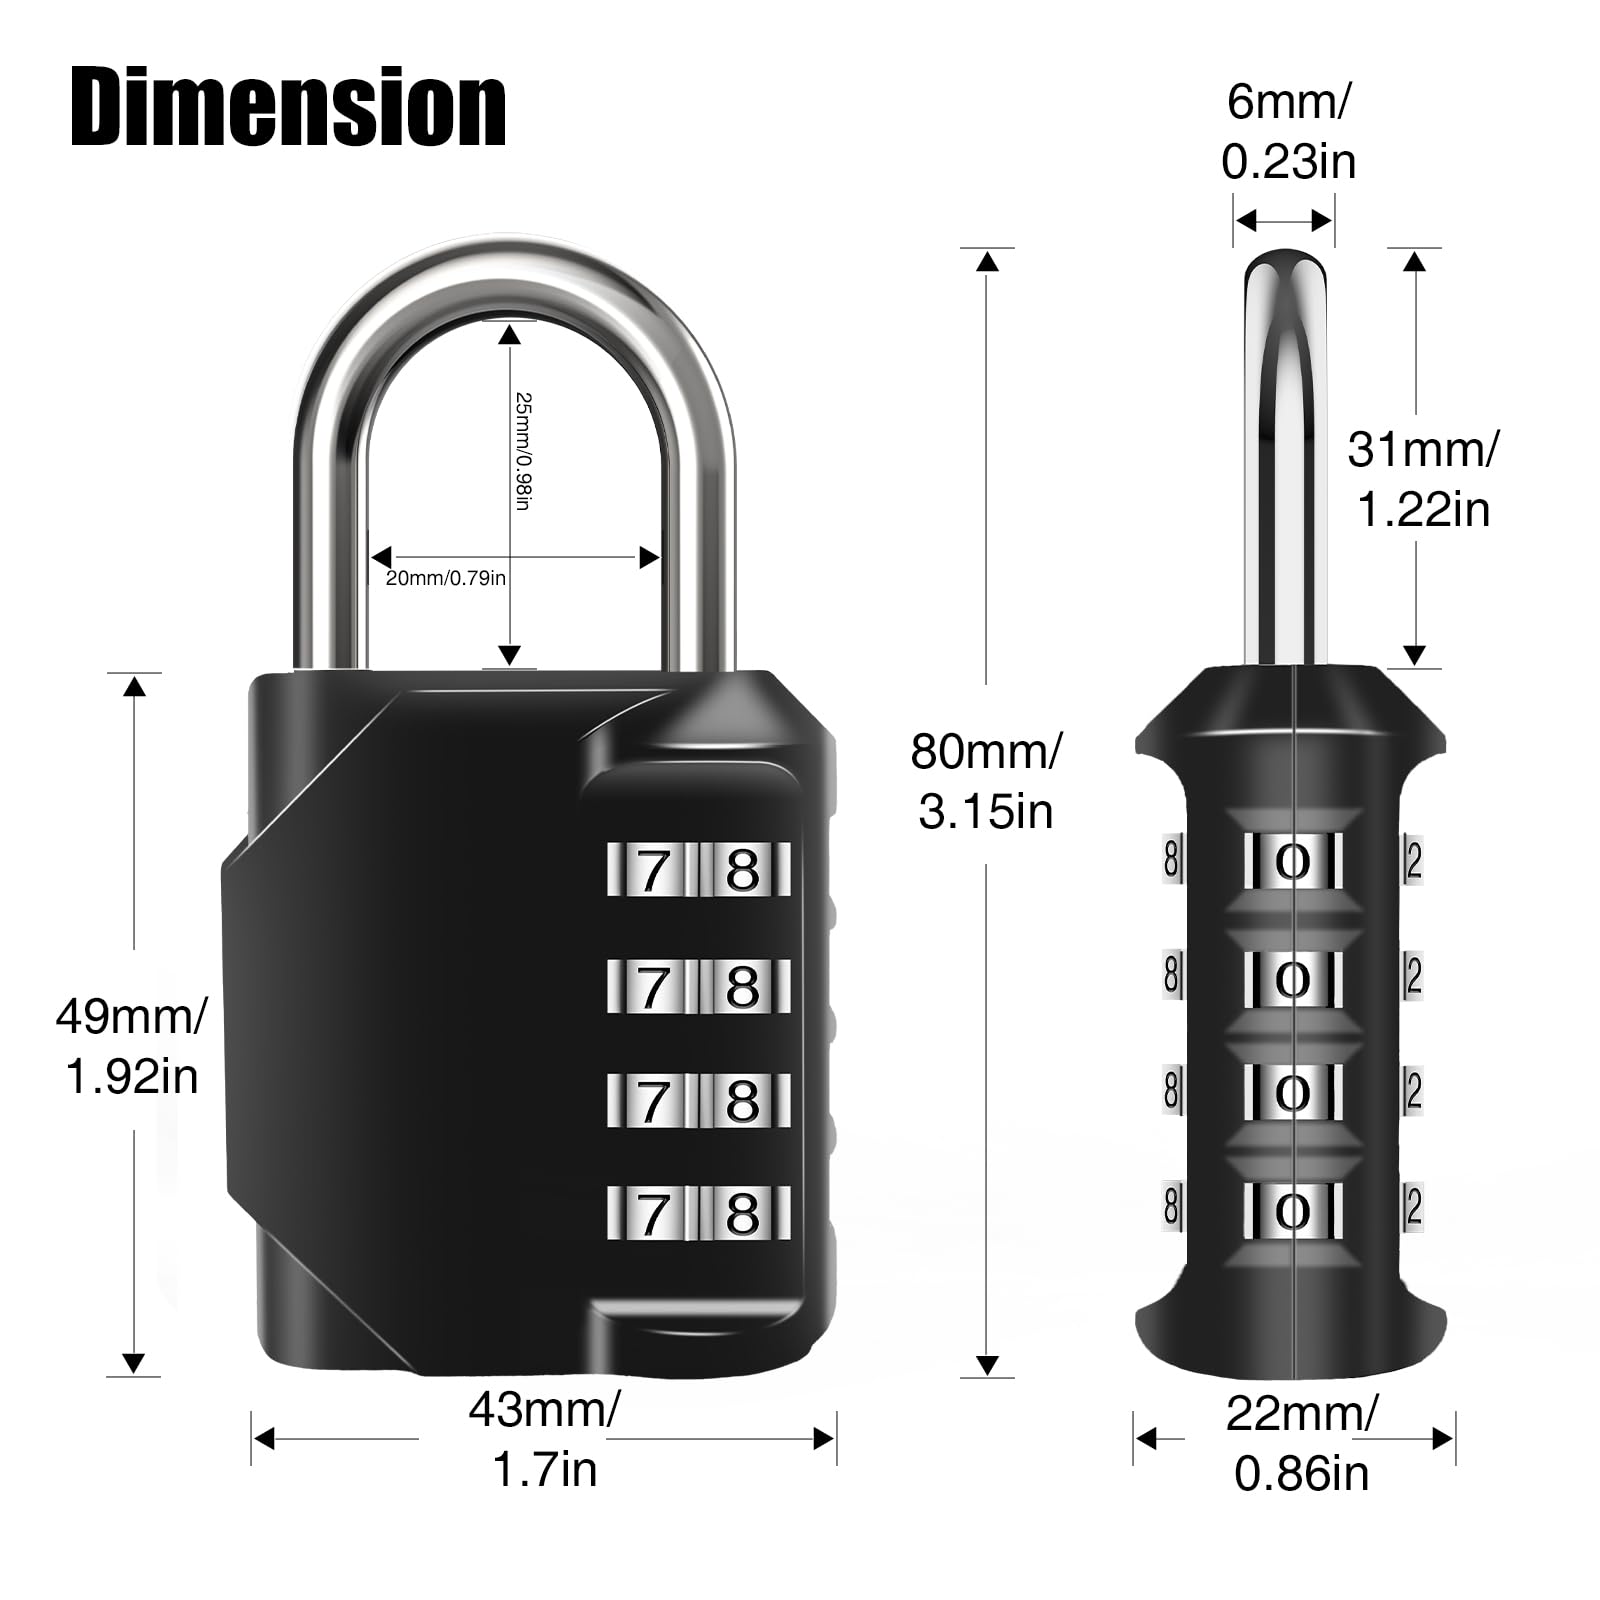 SUTOUG Combination Lock Waterproof 4 Digit Padlocks with Combination Code, Zinc Alloy Combination Lock for Door, Tool Boxes, Schools, Gym, Garden, Fences, Reel Cabinet & Storage, Black